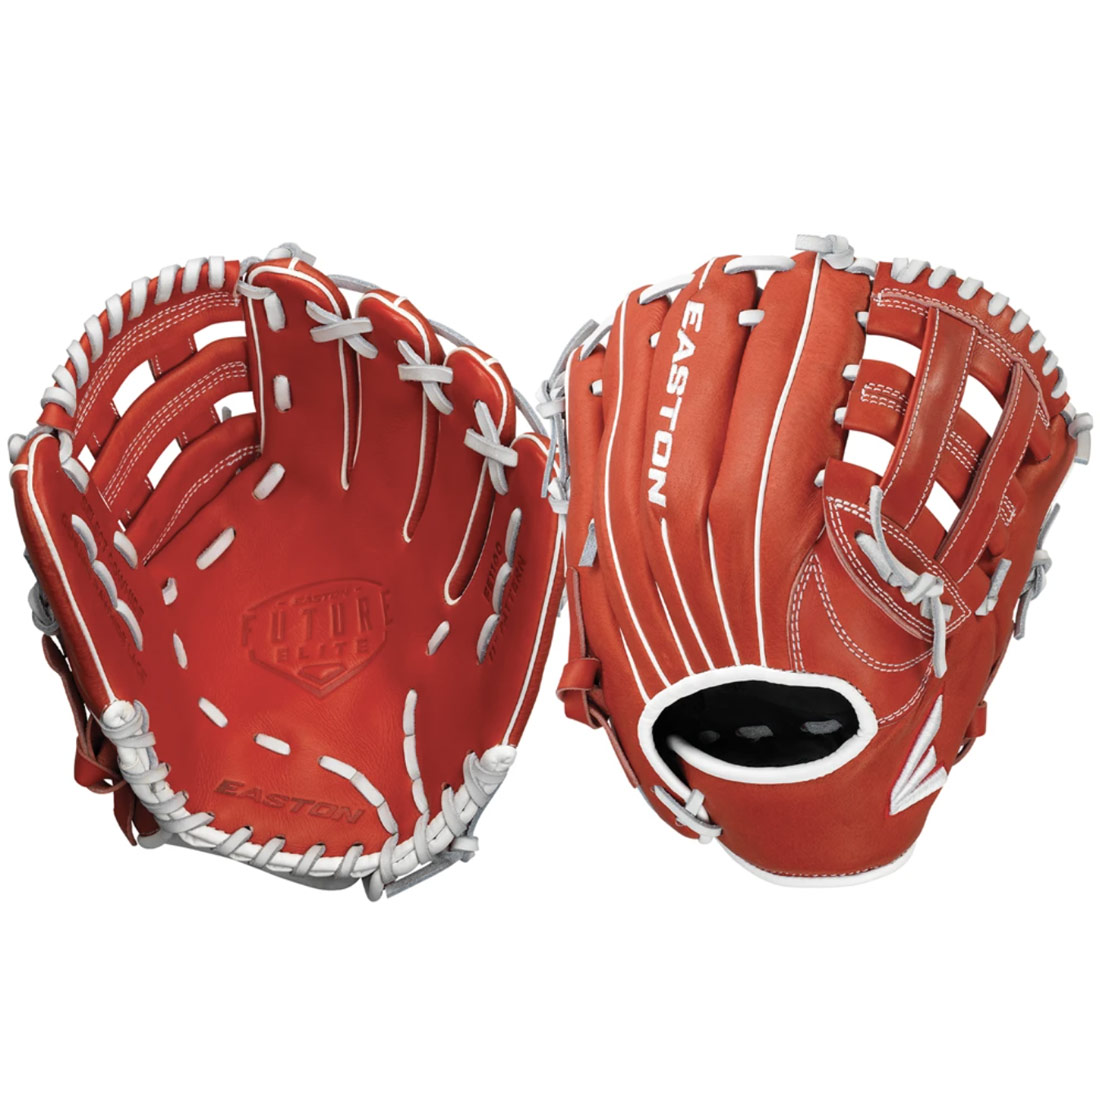 Easton Future Elite Youth Baseball Glove 11\" FE1100